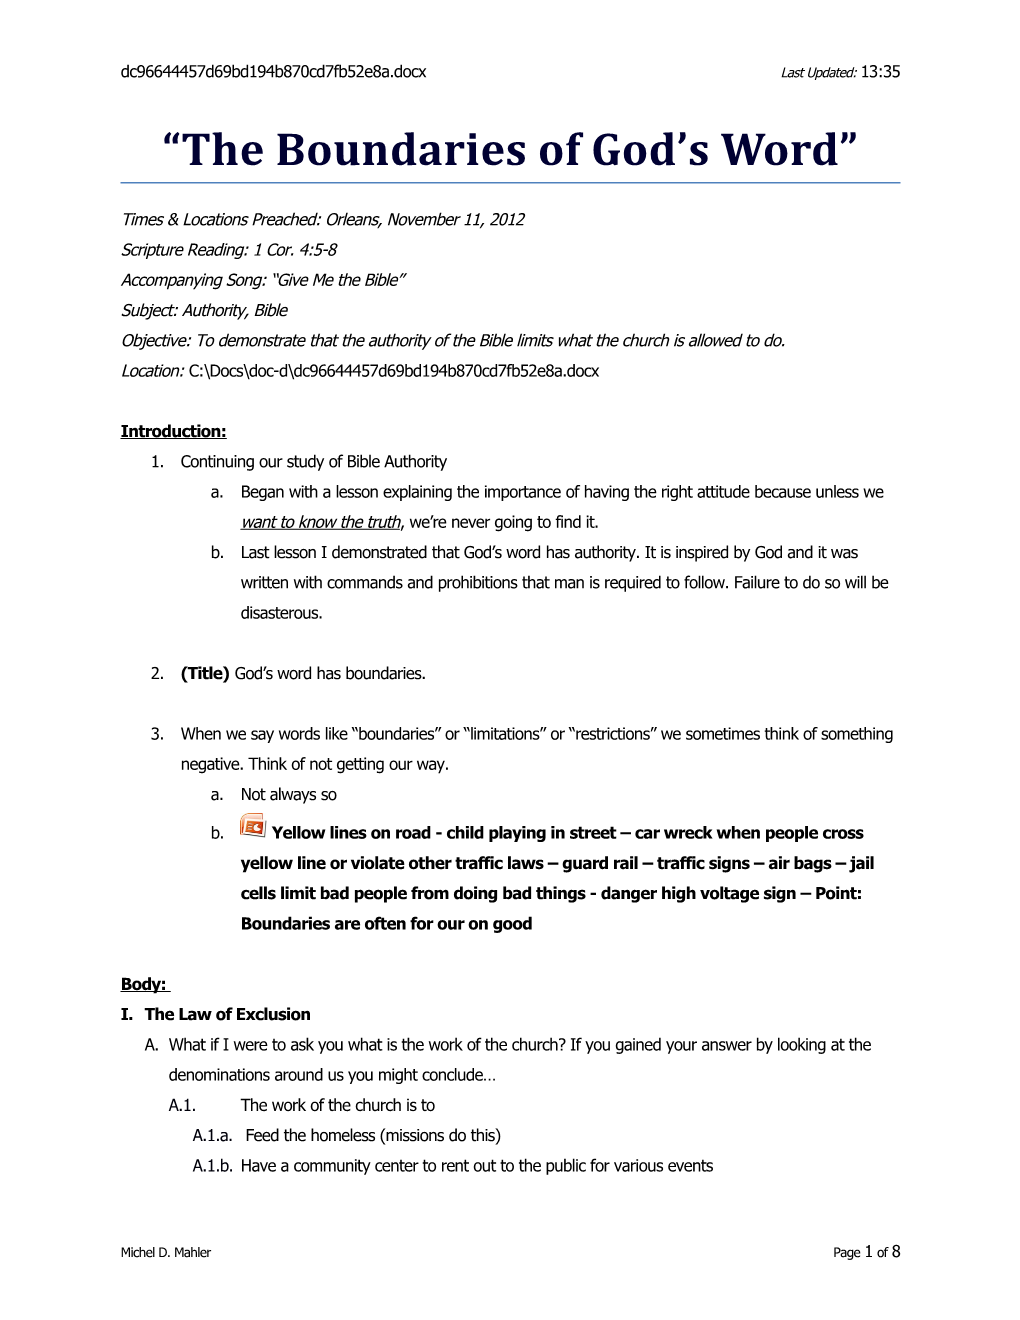 Boundaries Gods Wordlast Updated: 11/10/2012 11:51 PM